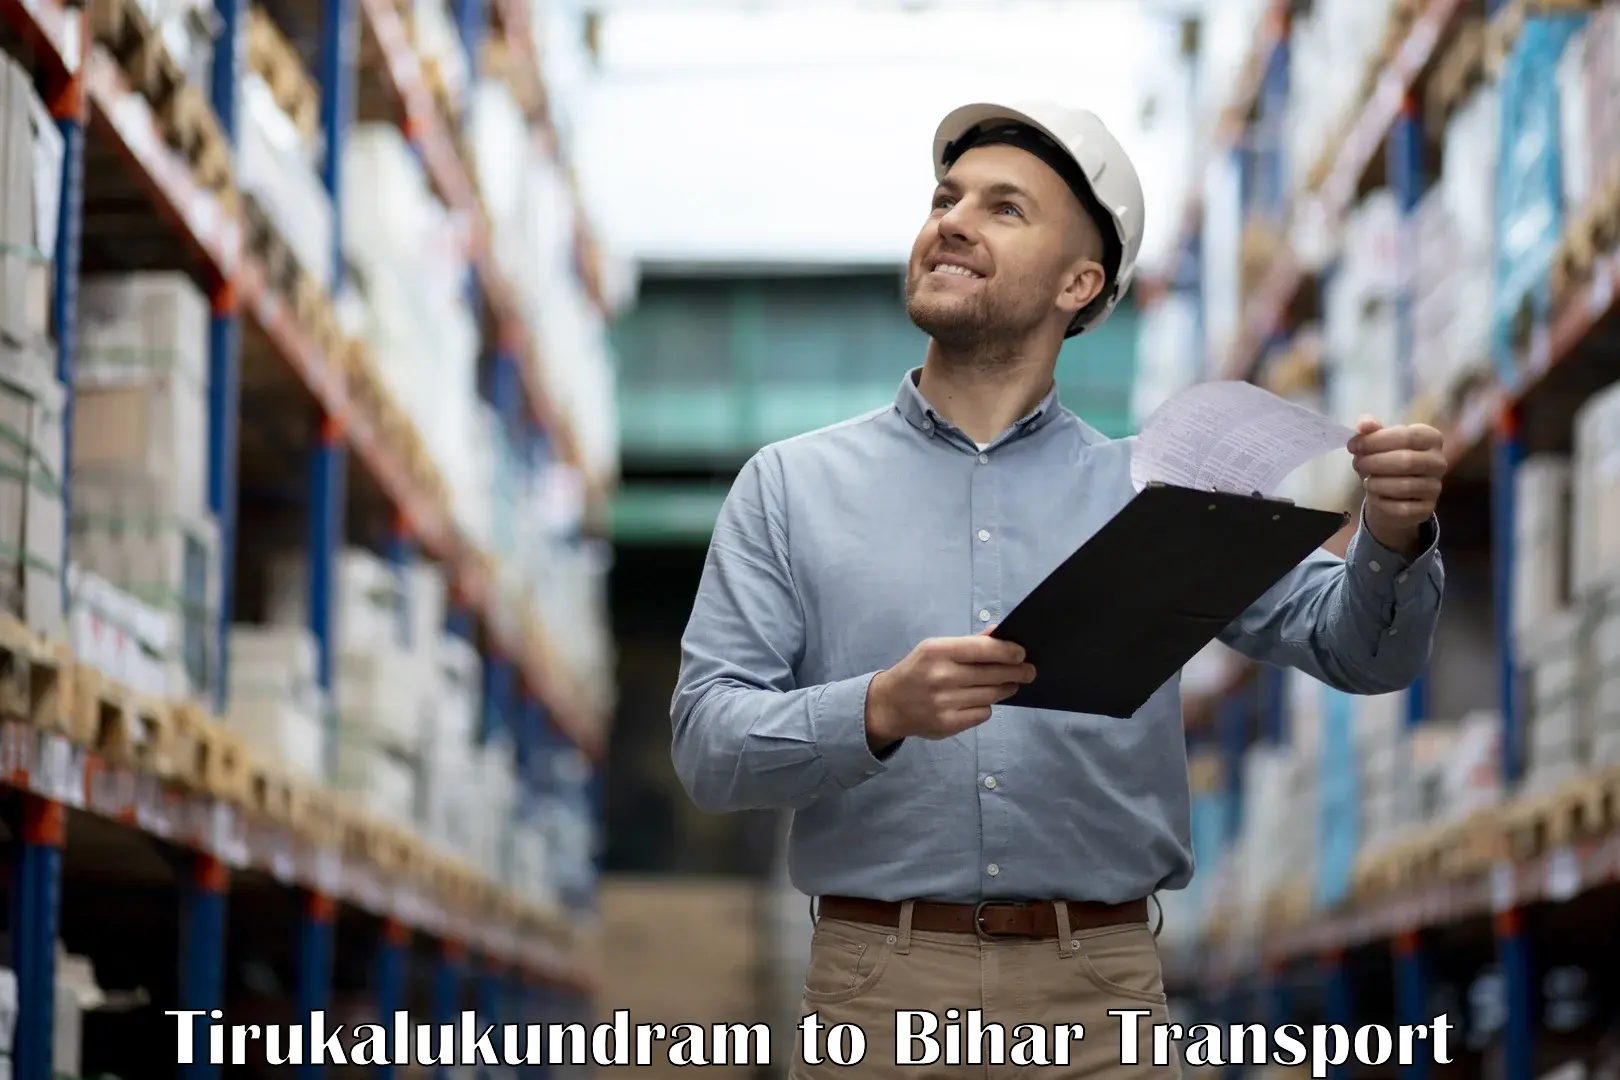 Furniture transport service Tirukalukundram to Dhaka